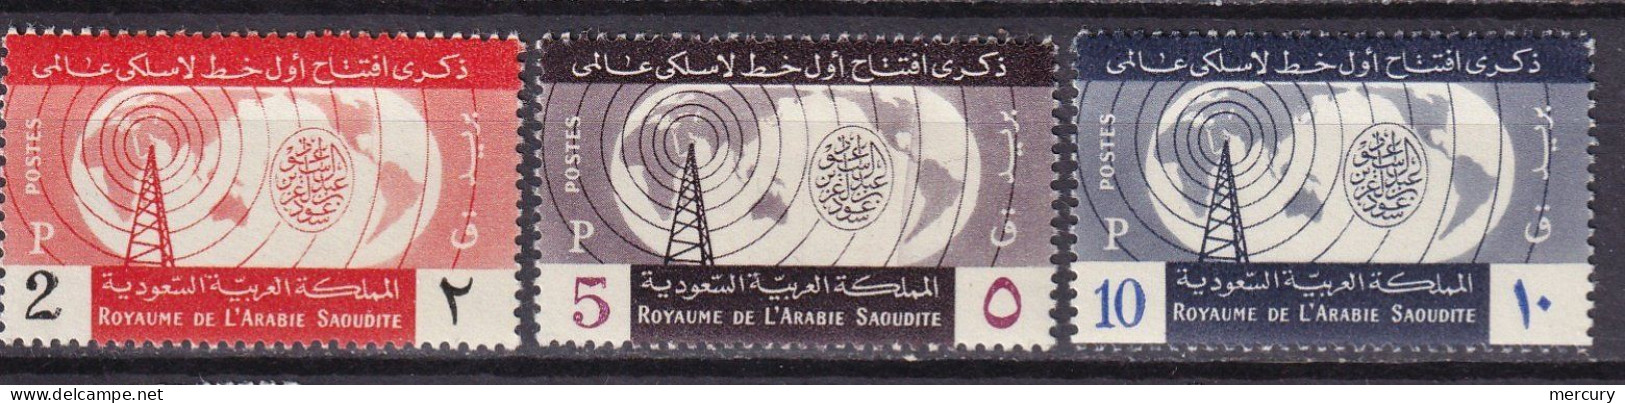 Radio-Ryad - Arabia Saudita